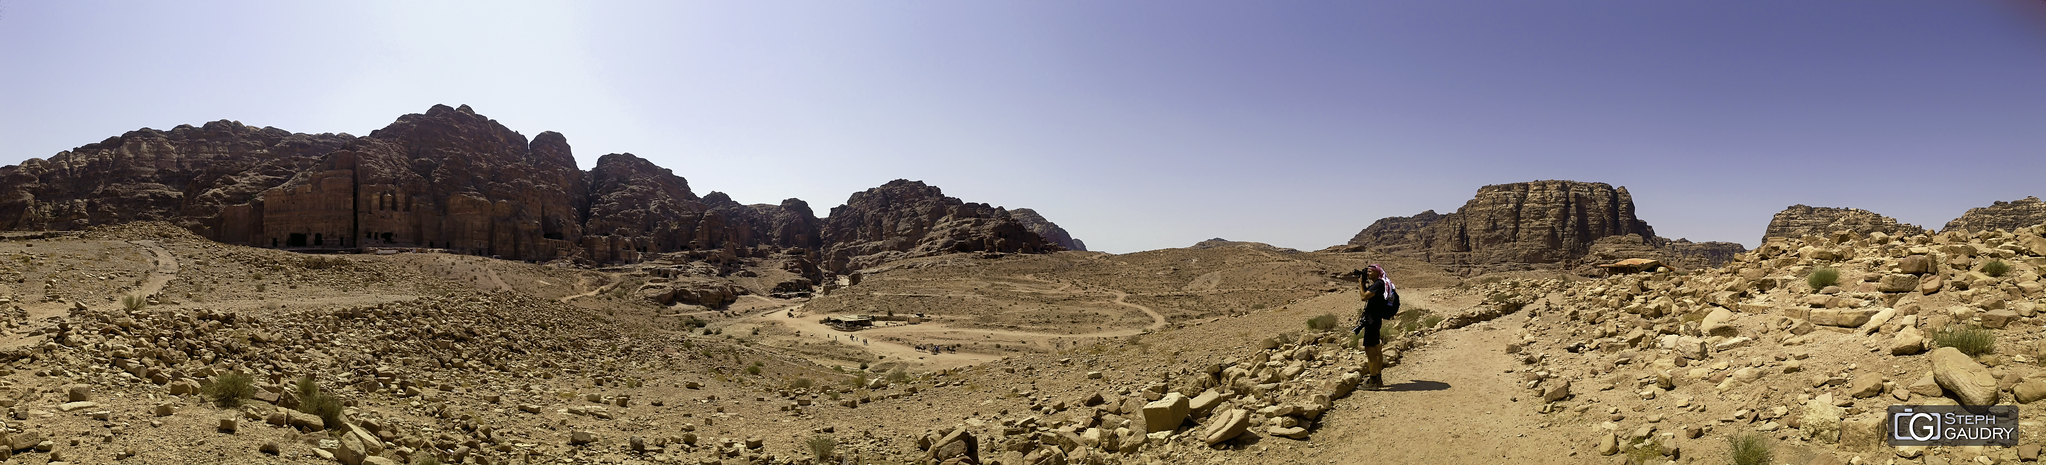 Les tombes royales de Petra - panorama gsm [Klik om de diavoorstelling te starten]